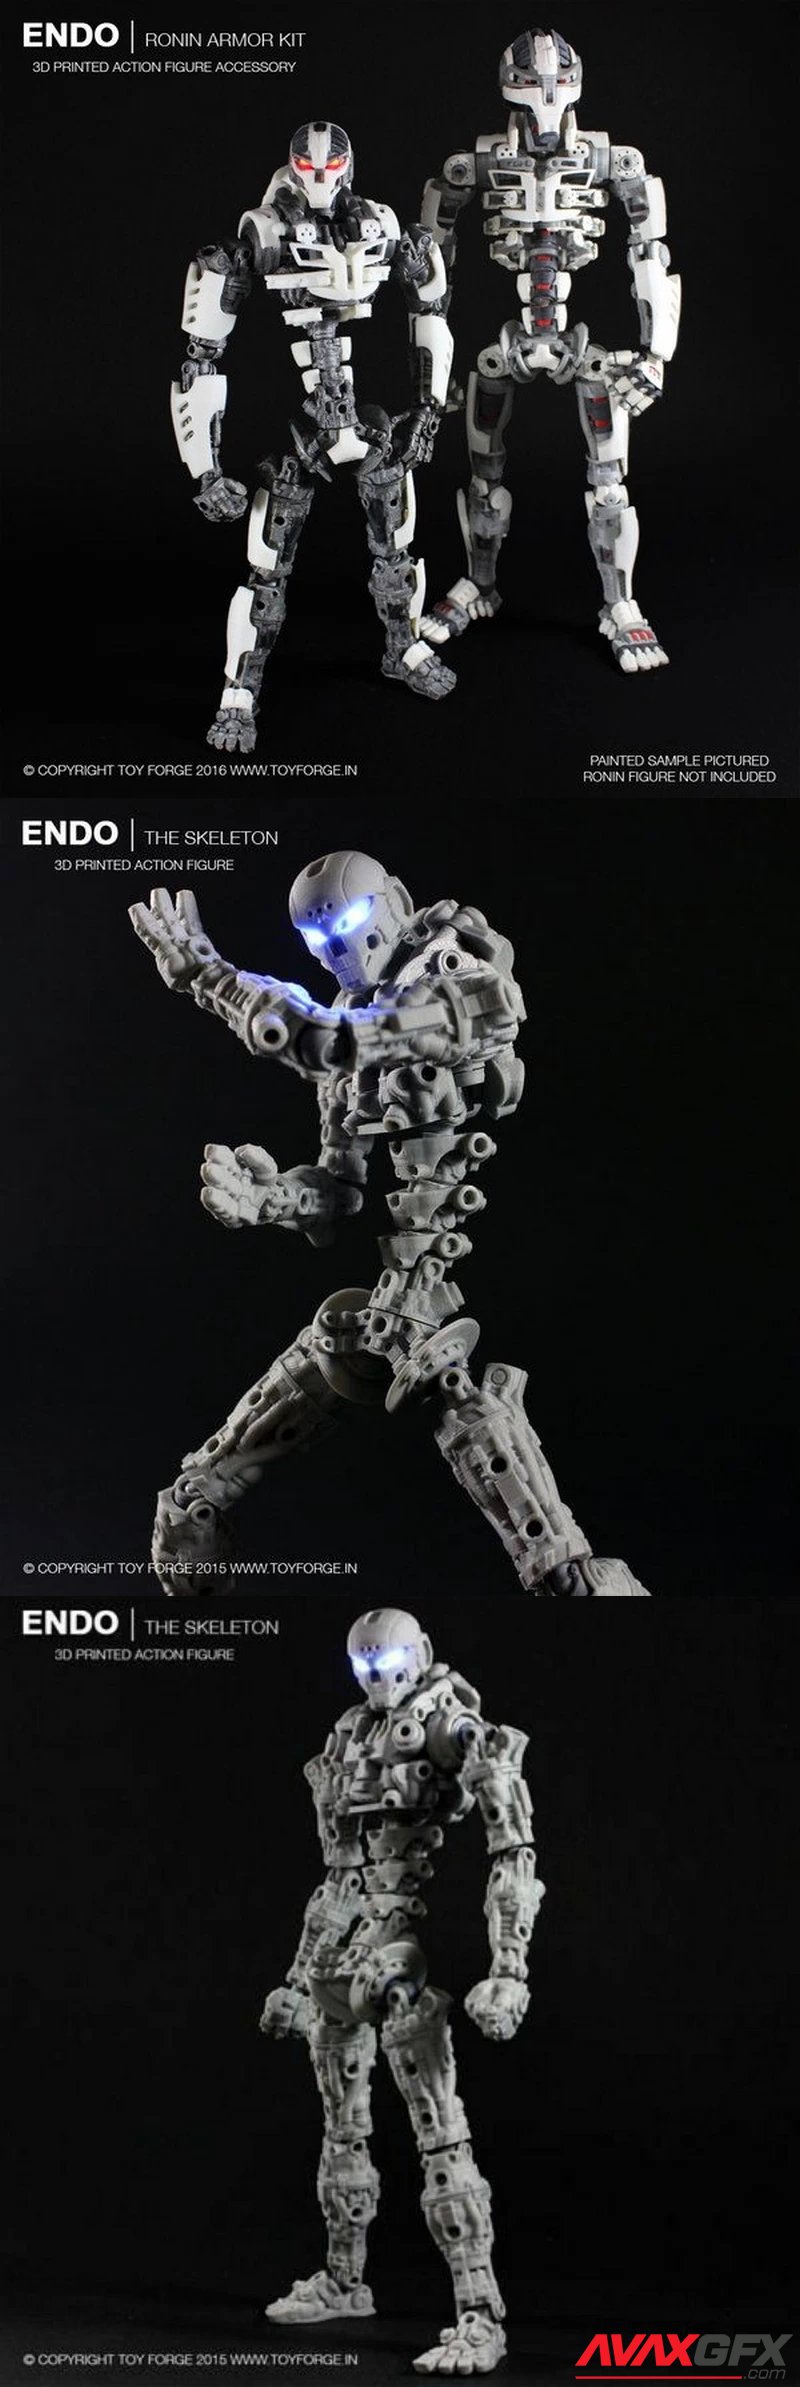 Toy Forge - Endo V2 + Ronin Armor